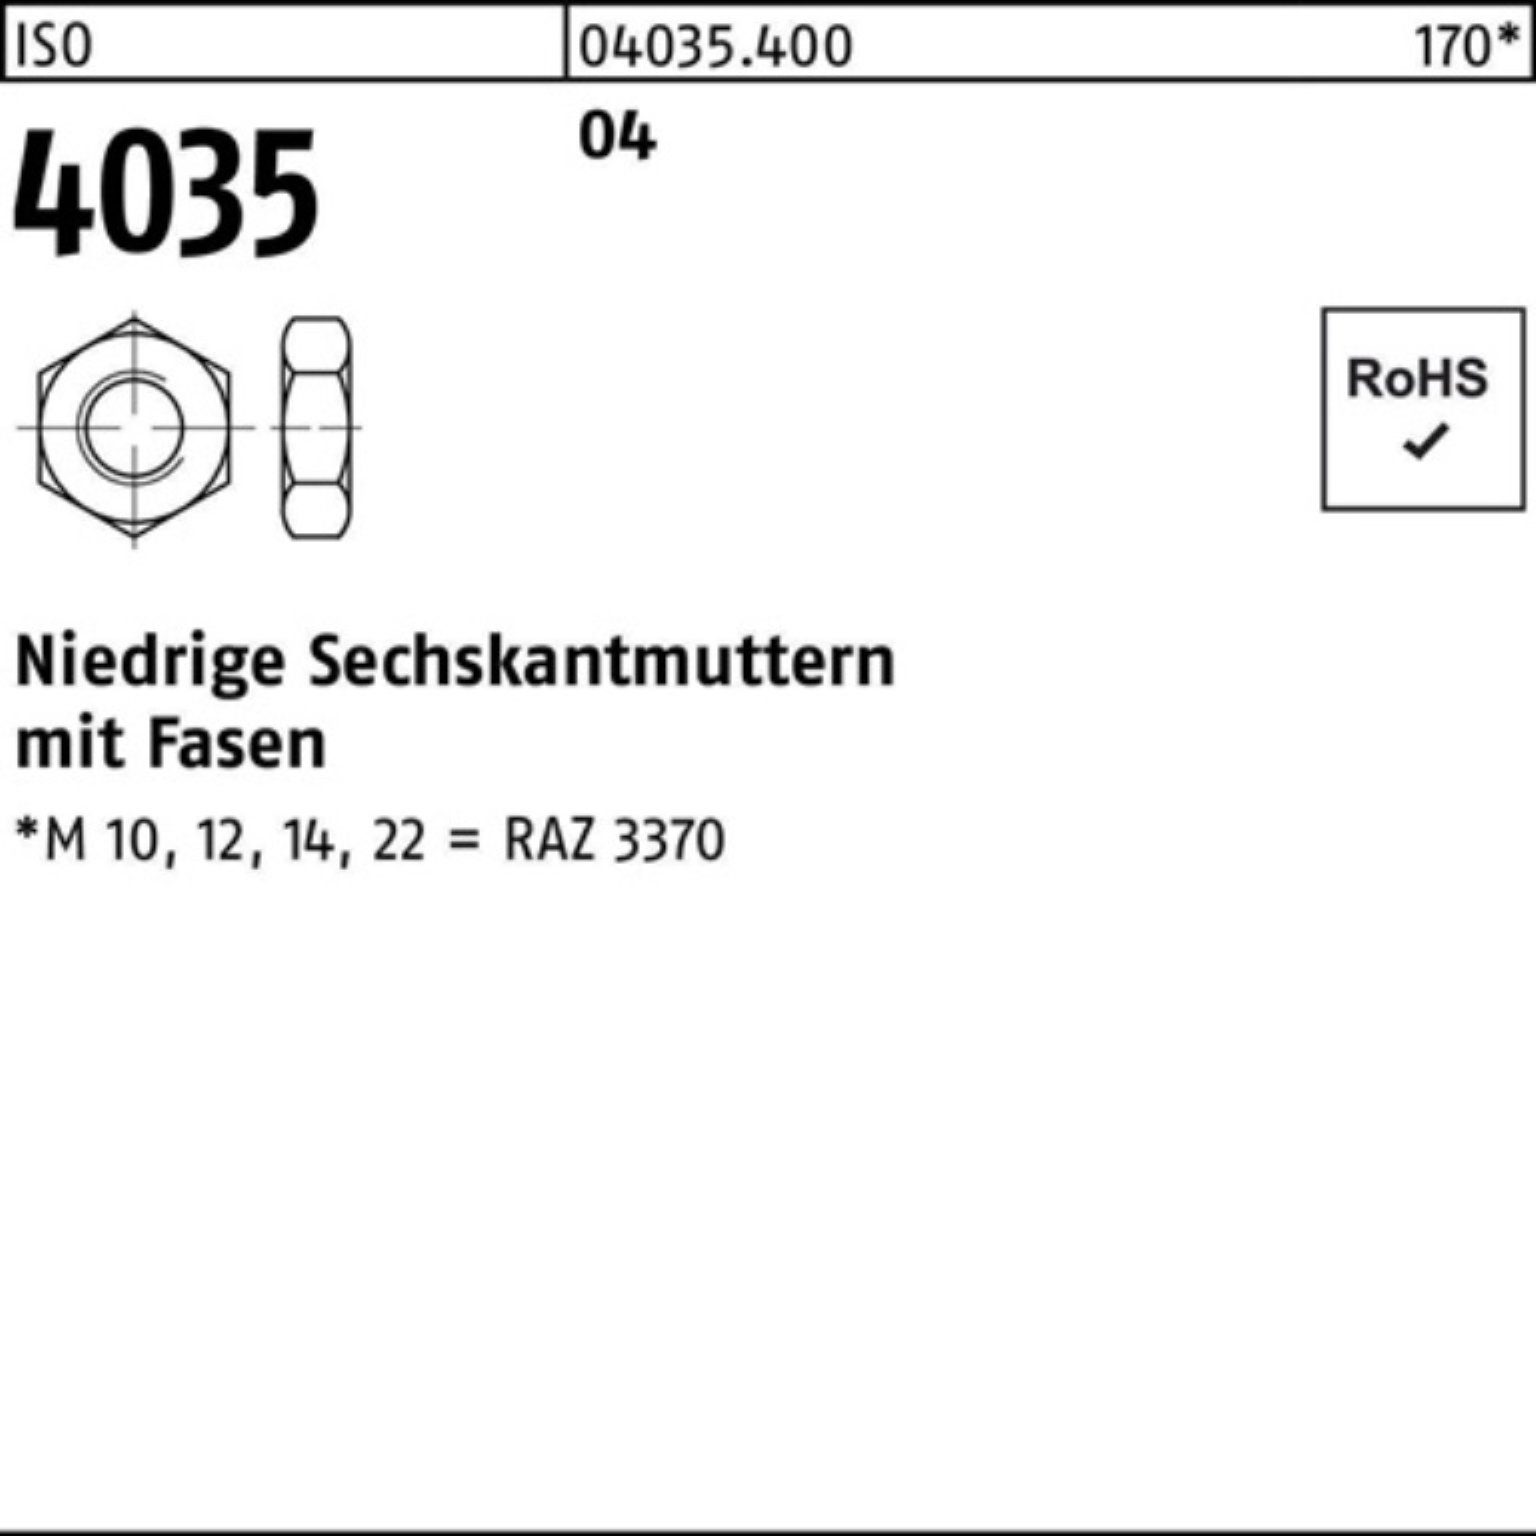 Reyher Muttern Fasen niedrig 2 ISO 100er Automatenstahl Sechskantmutter Pack M30 4035